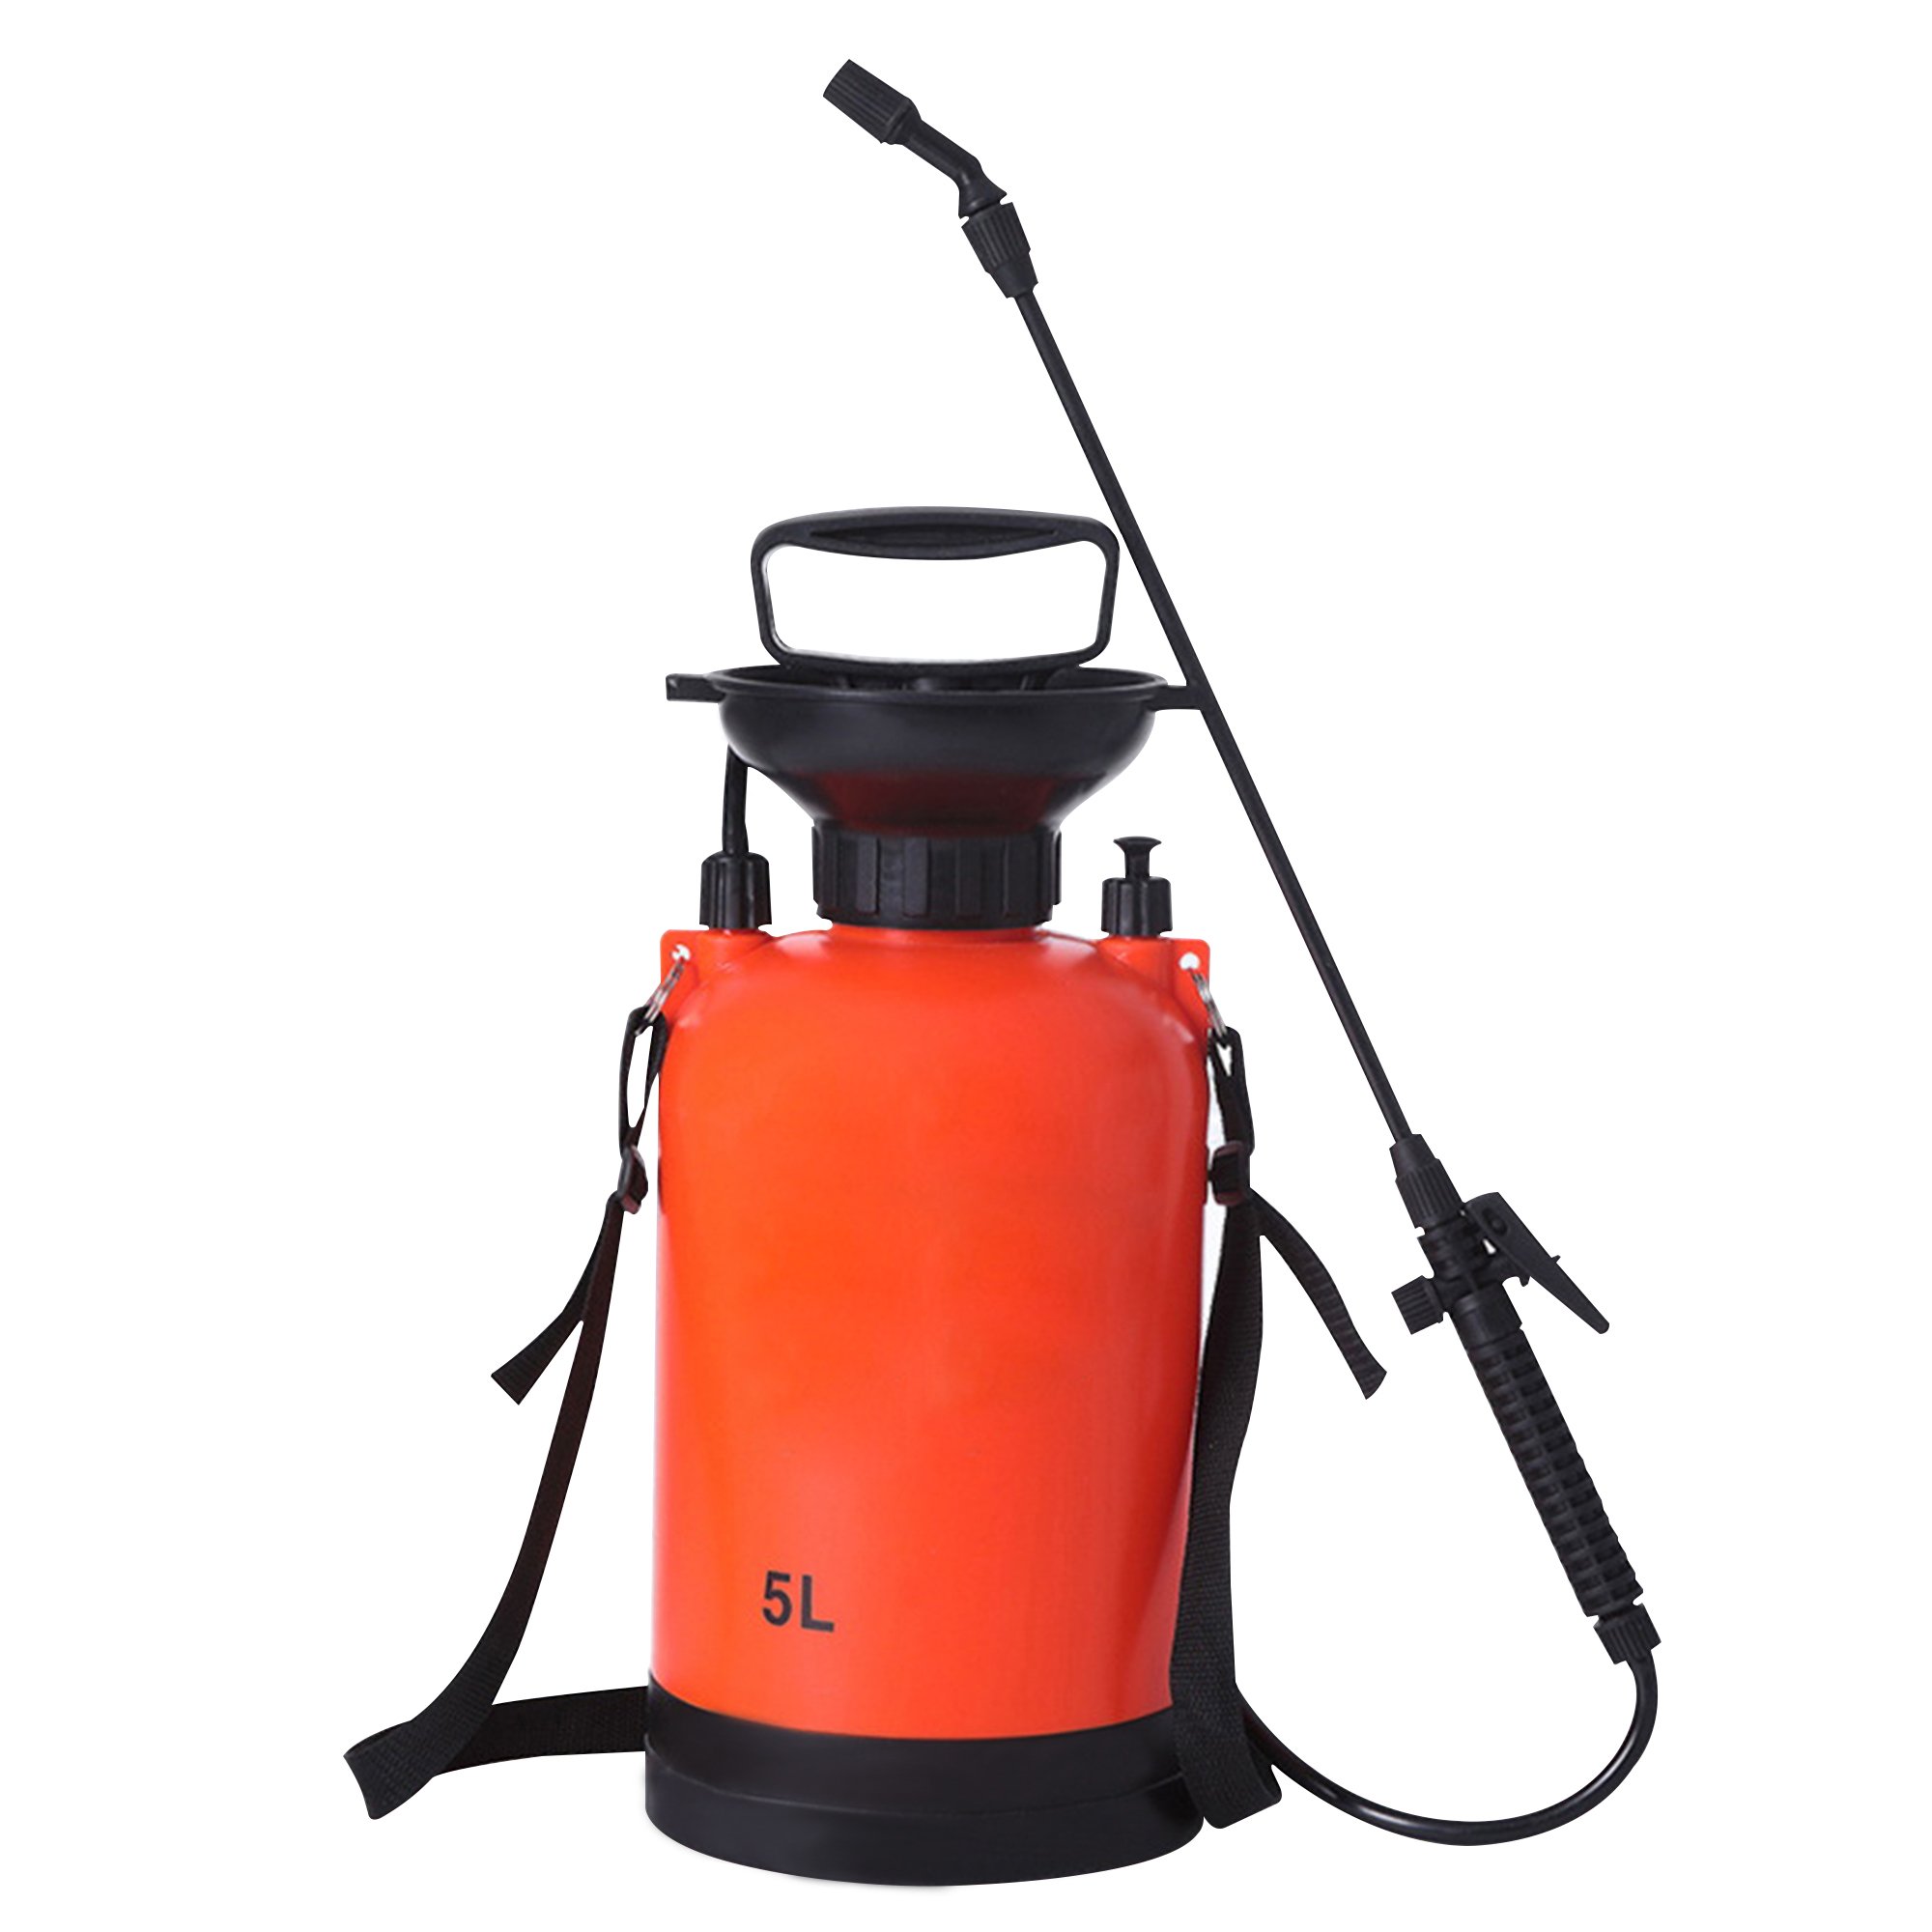 5L Manual Water Sanitizer Pressure Sprayer